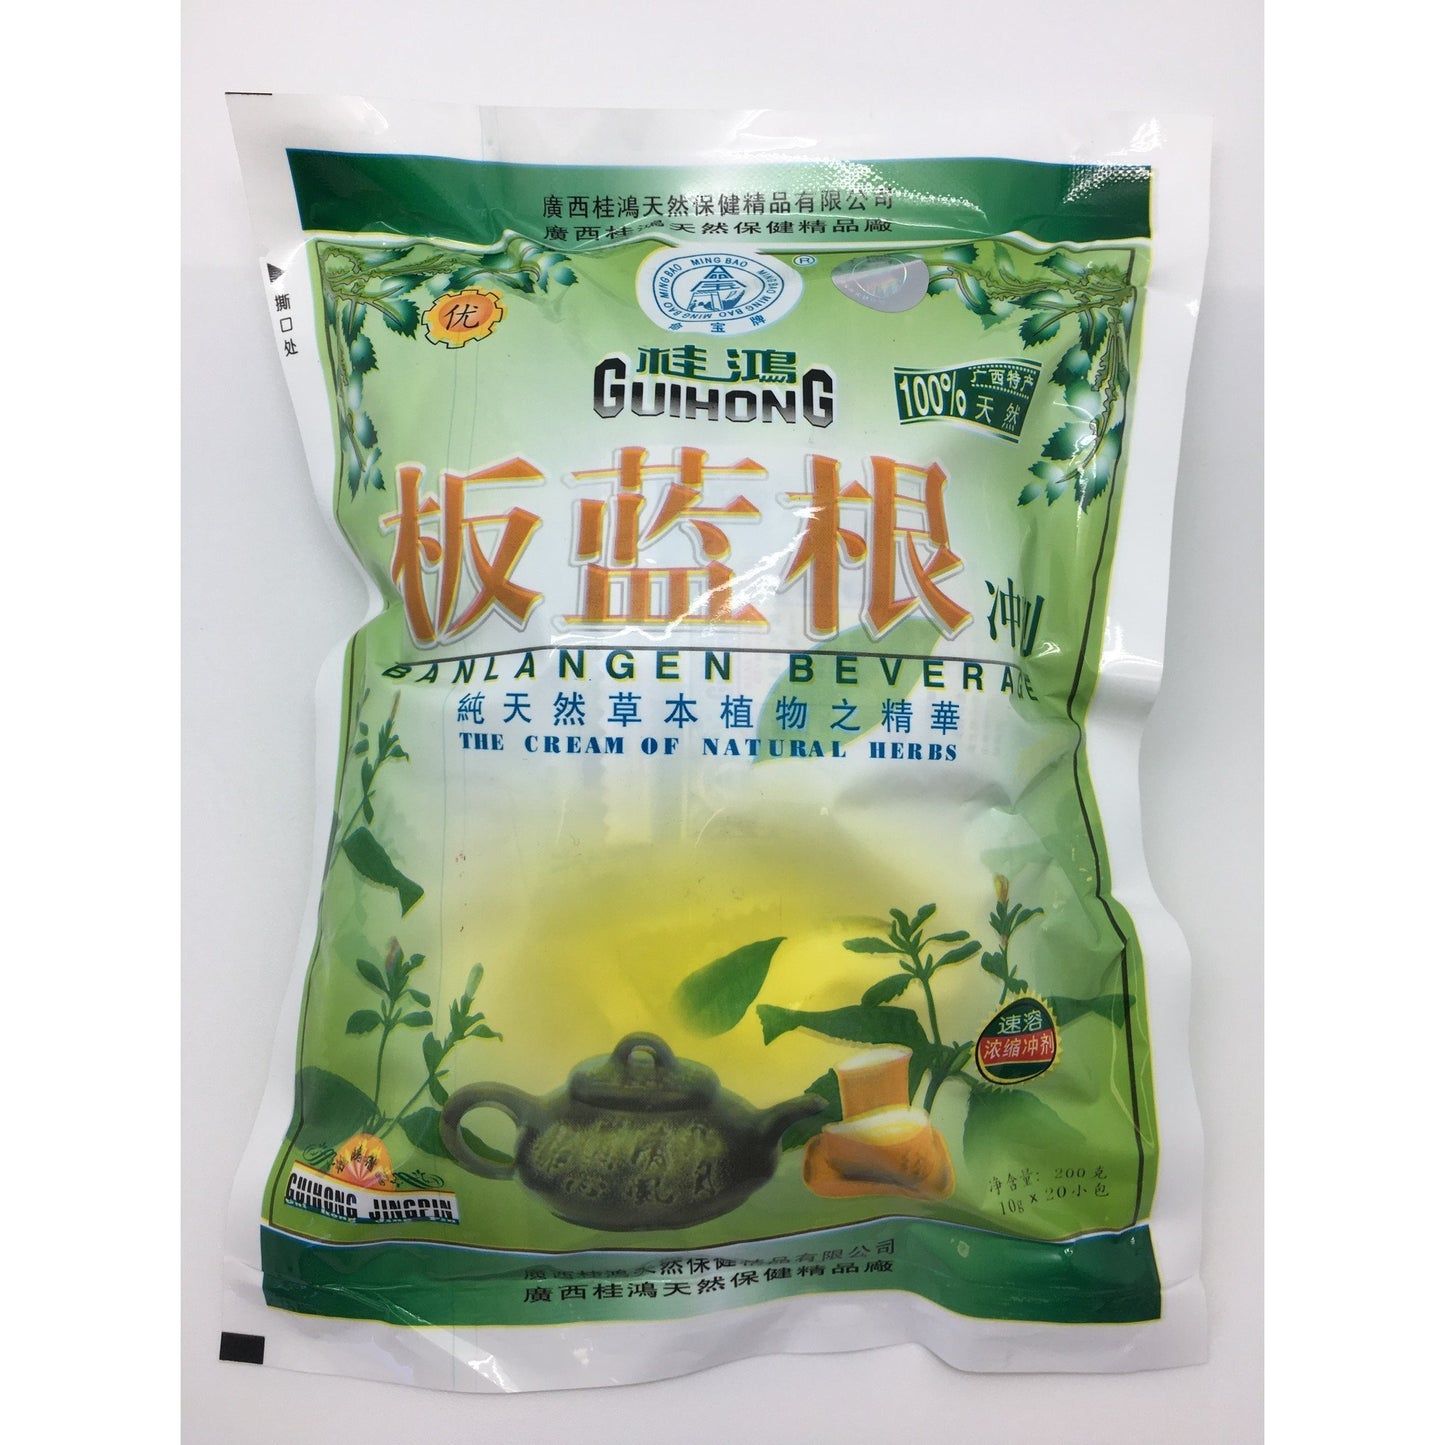 I032B MingBao Brand - BanLanGen Beverage 20x10g - 50 bags / 1 CTN - New Eastland Pty Ltd - Asian food wholesalers